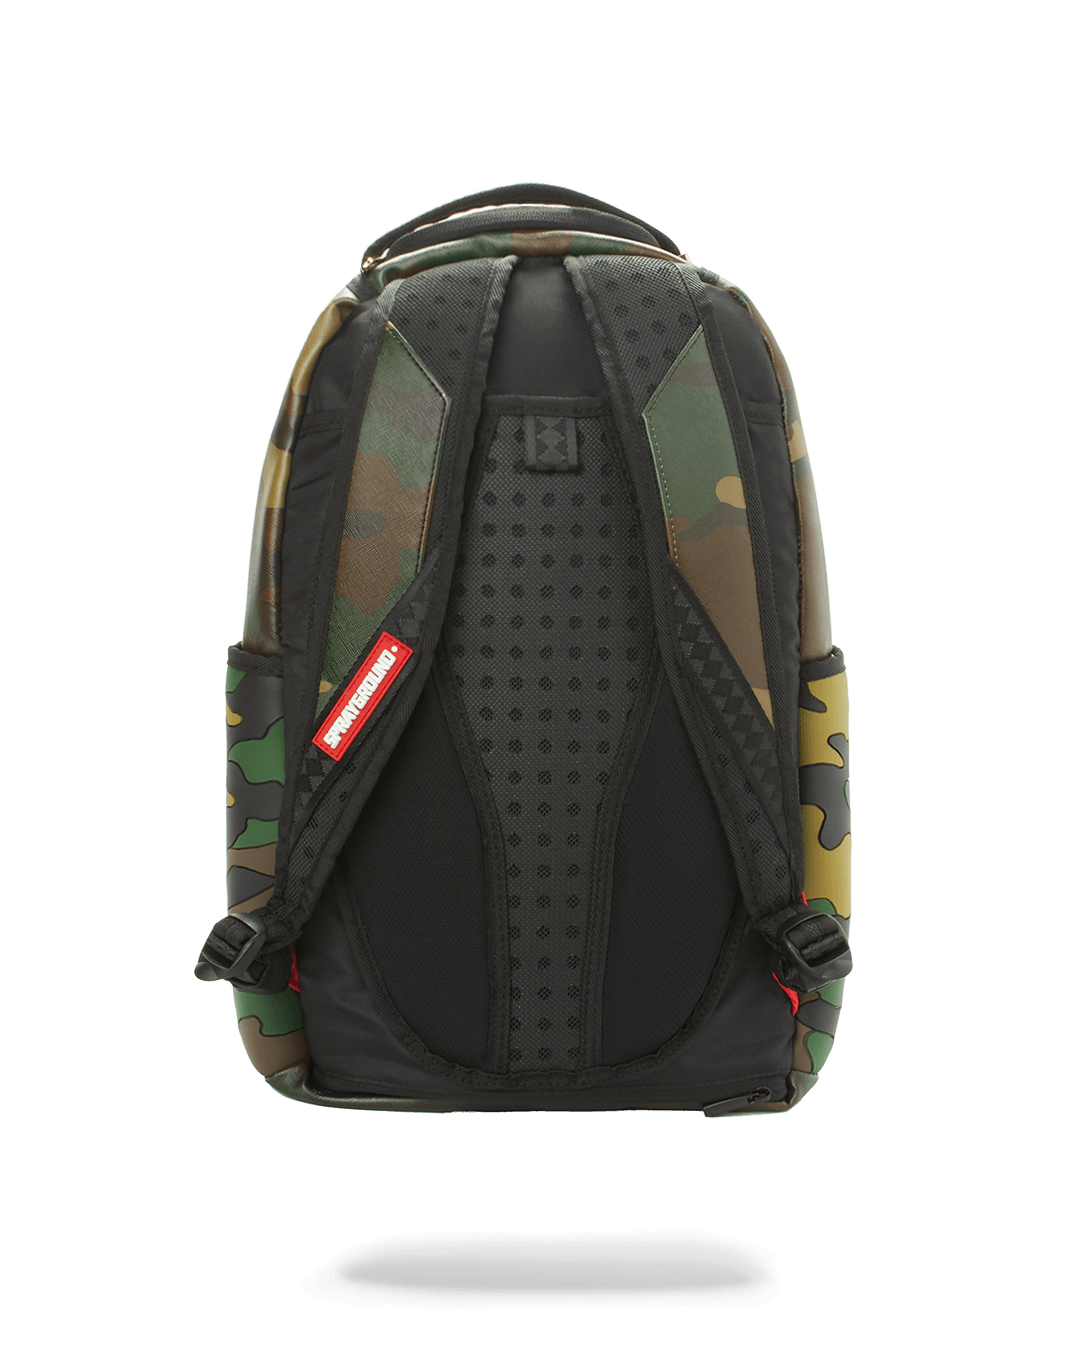 Discount | Bodyguard (Camo) Backpack Sprayground Sale Sale At 53% | 0